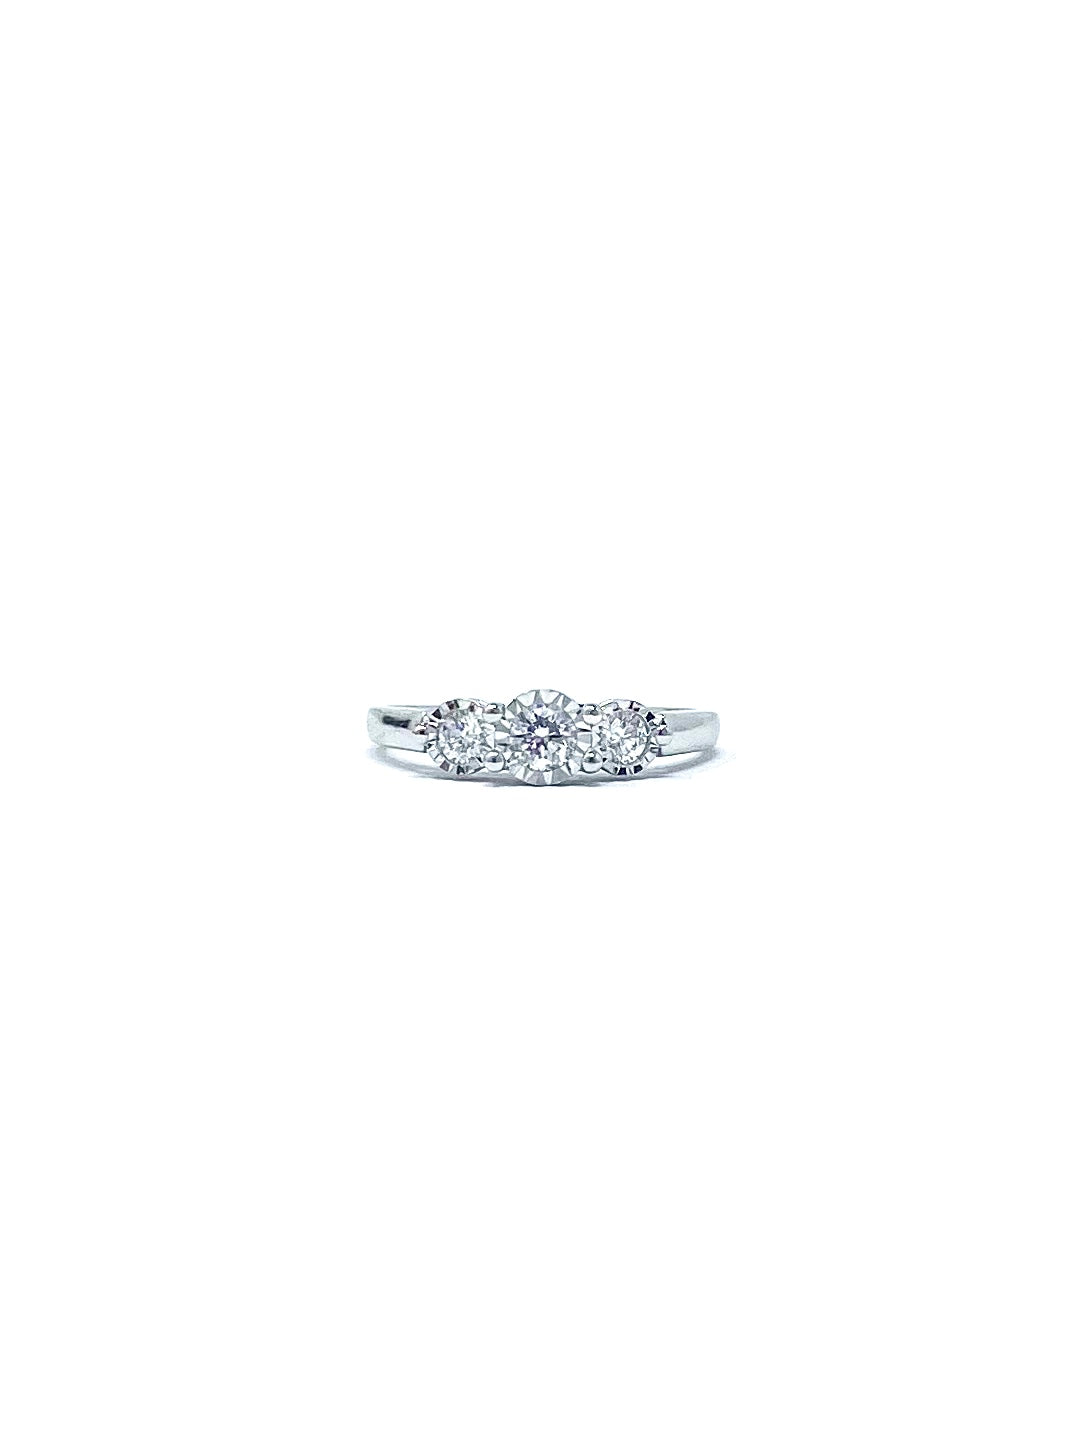 10K White Gold 0.29cttw 3 Stone Diamond Engagement Ring - Size 6.5